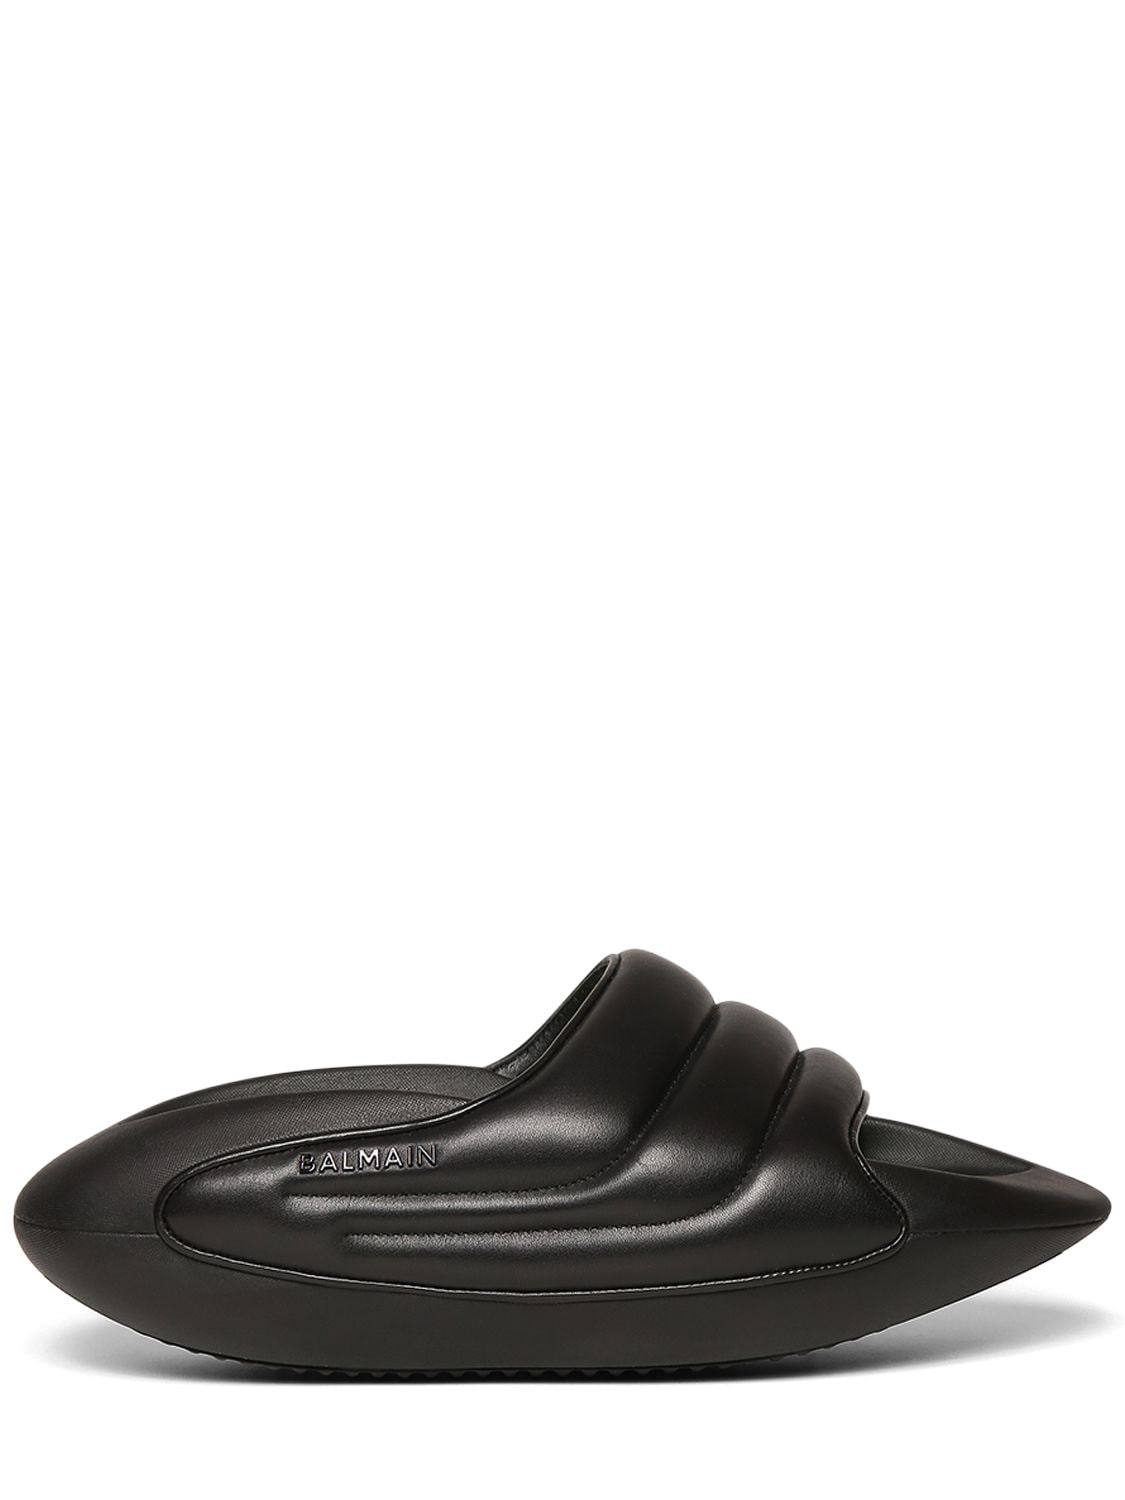 Balmain - B it quilted leather slide sandals - Black | Luisaviaroma